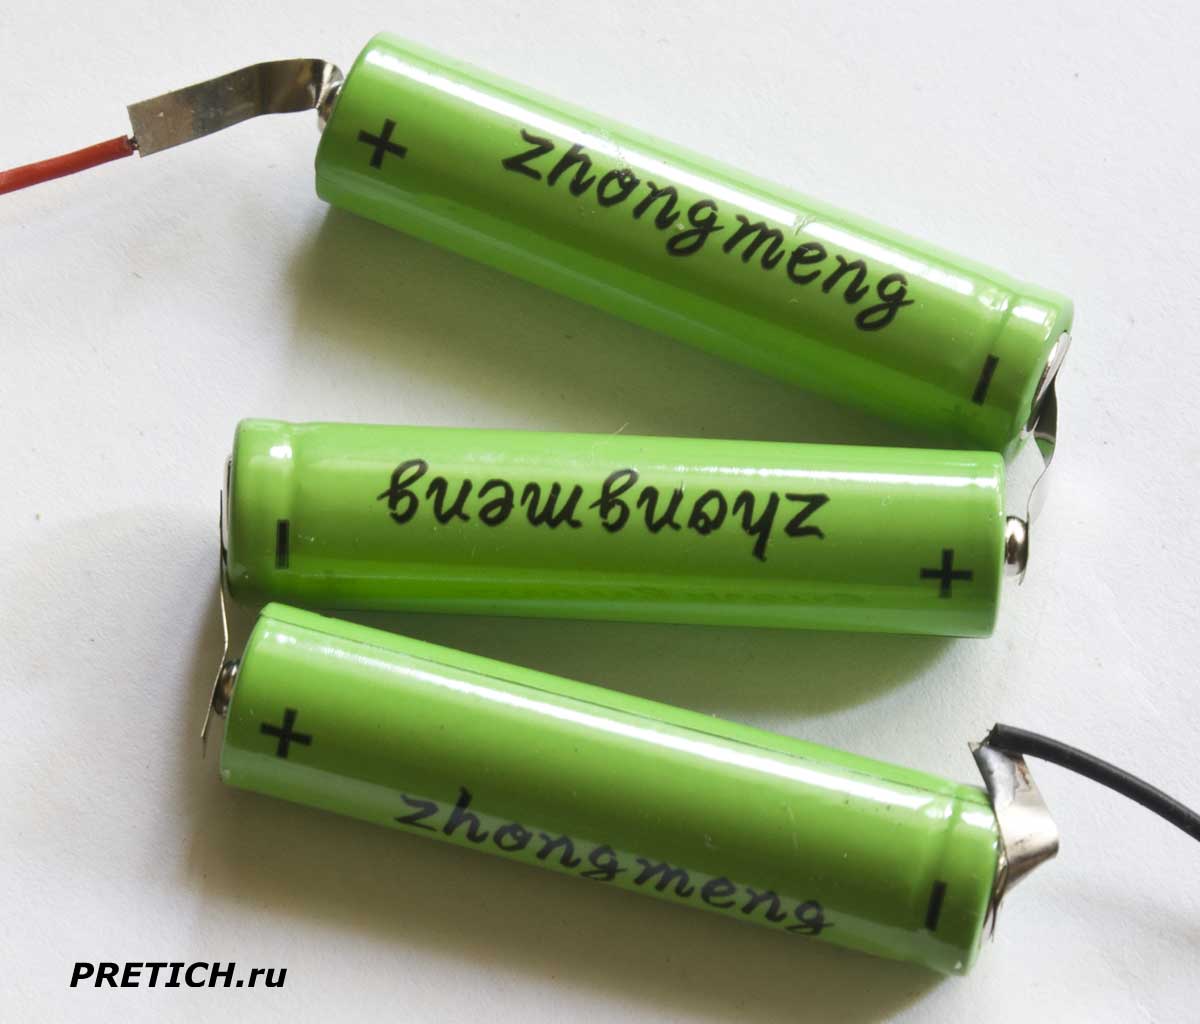 Zhongmeng ААА аккумуляторные батареи в фонарике Sihong SH-5800T